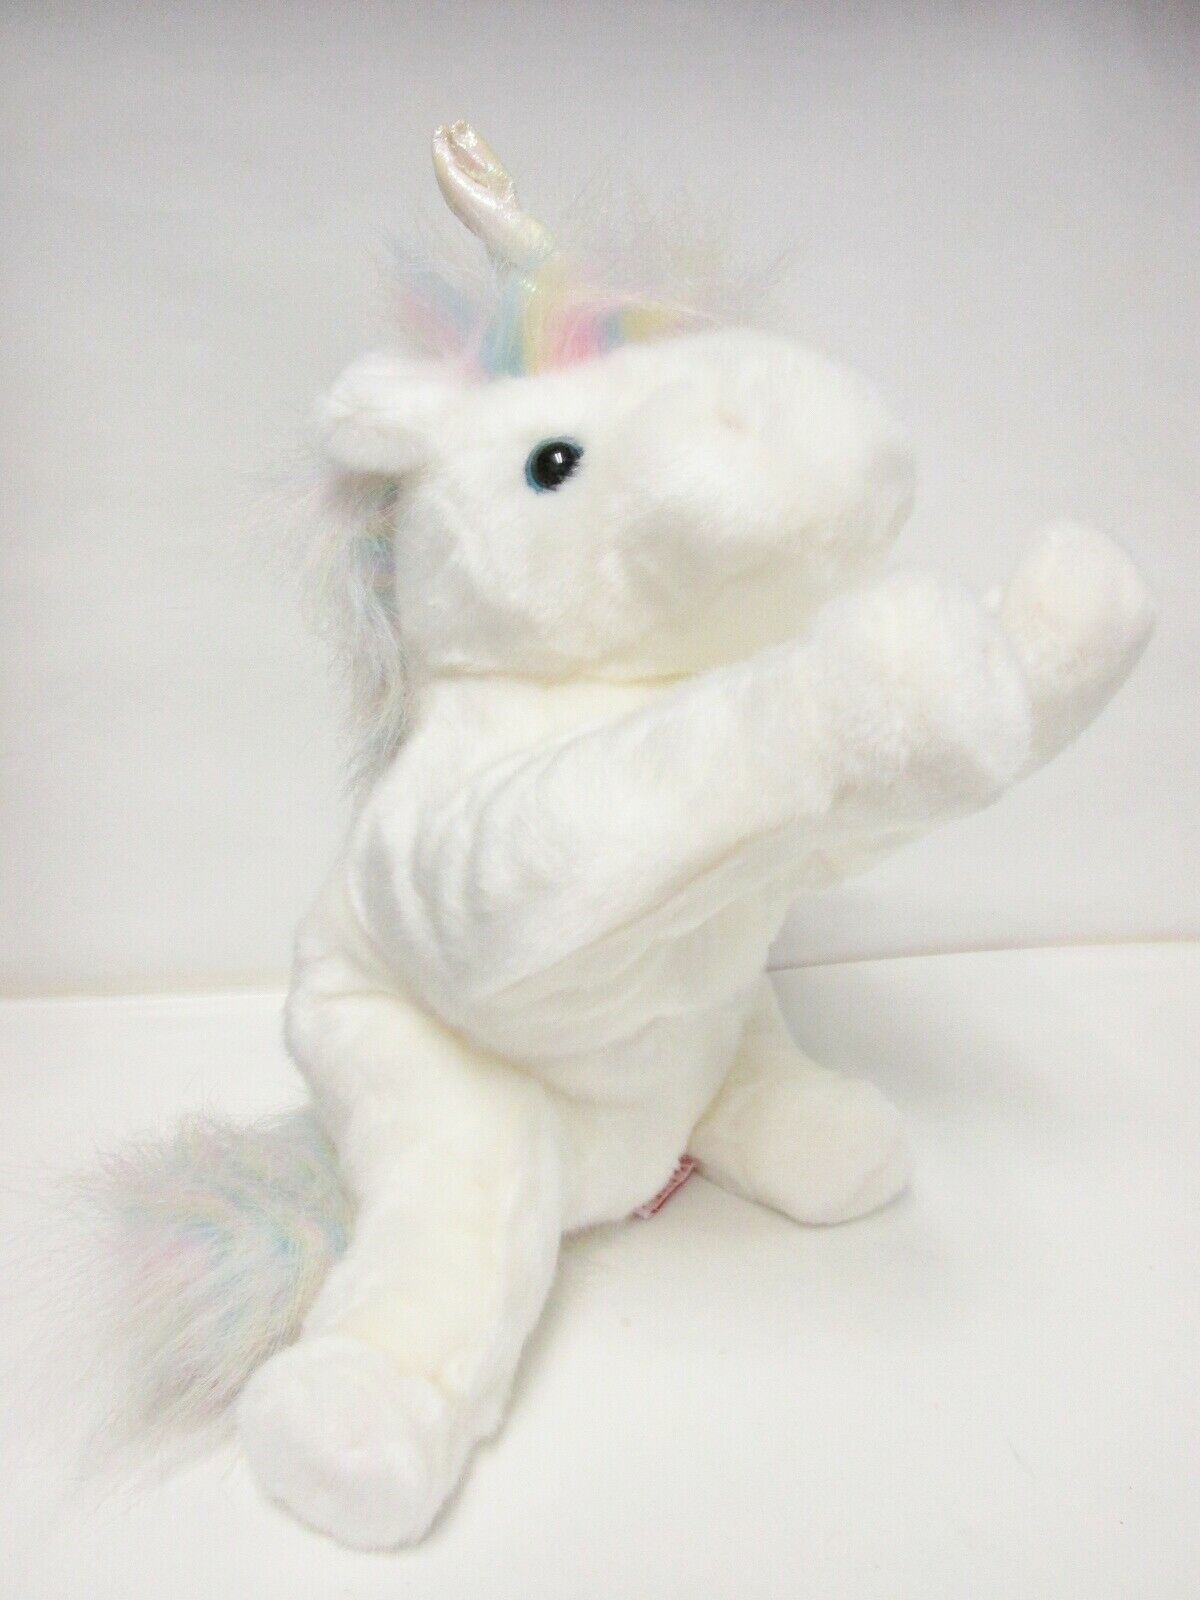 Unicorn Travel Cushion: Unicorn Gifts & Collectibles — FairyGlen Store